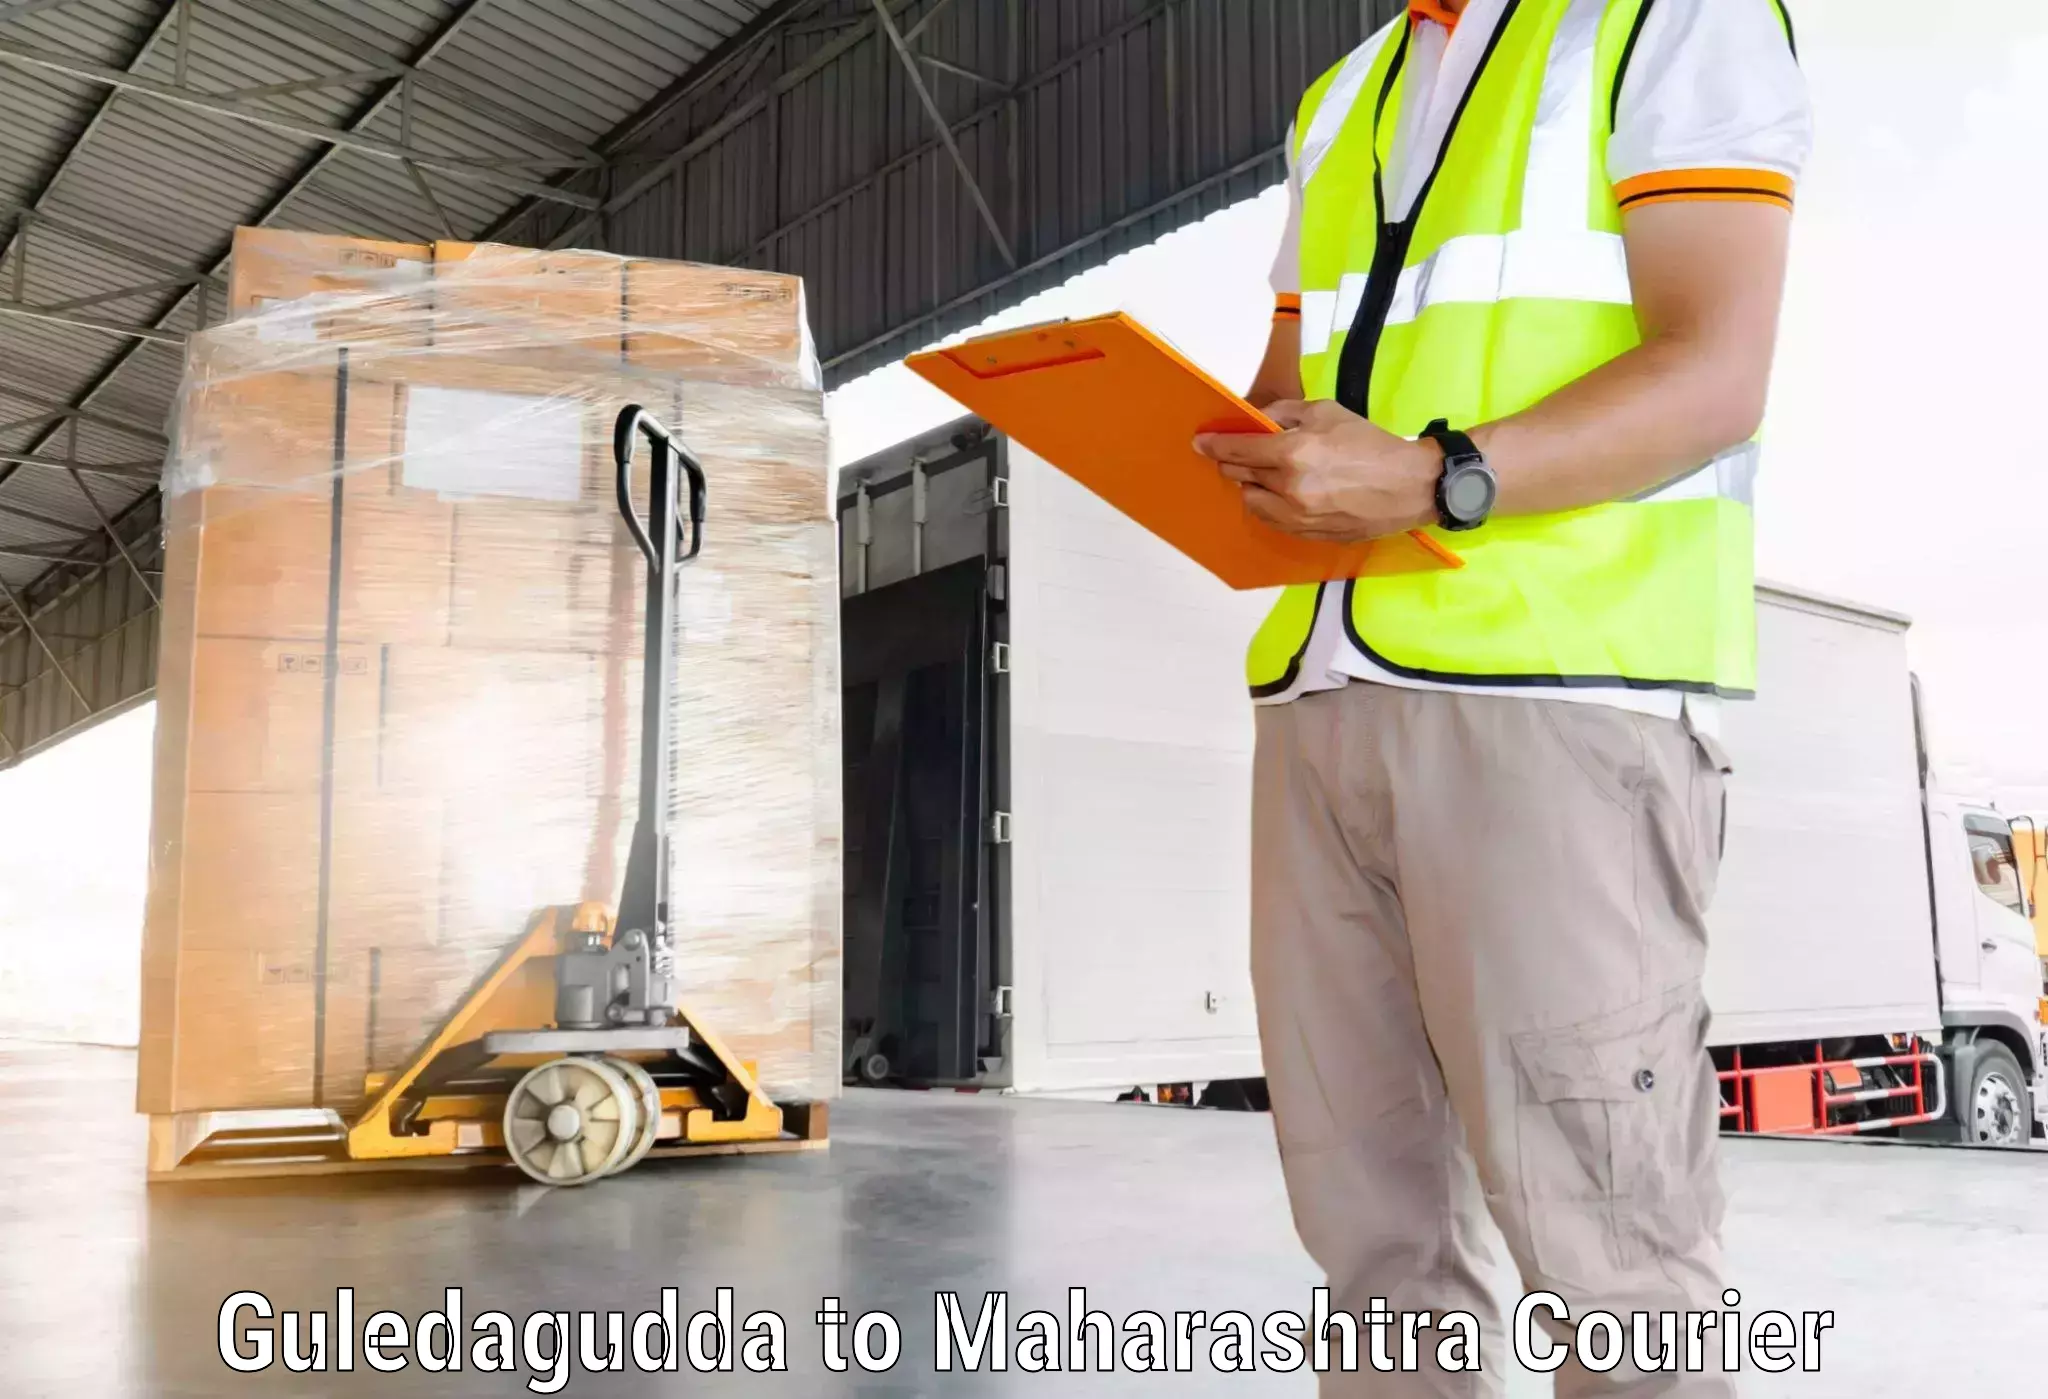 Courier service innovation in Guledagudda to Atpadi